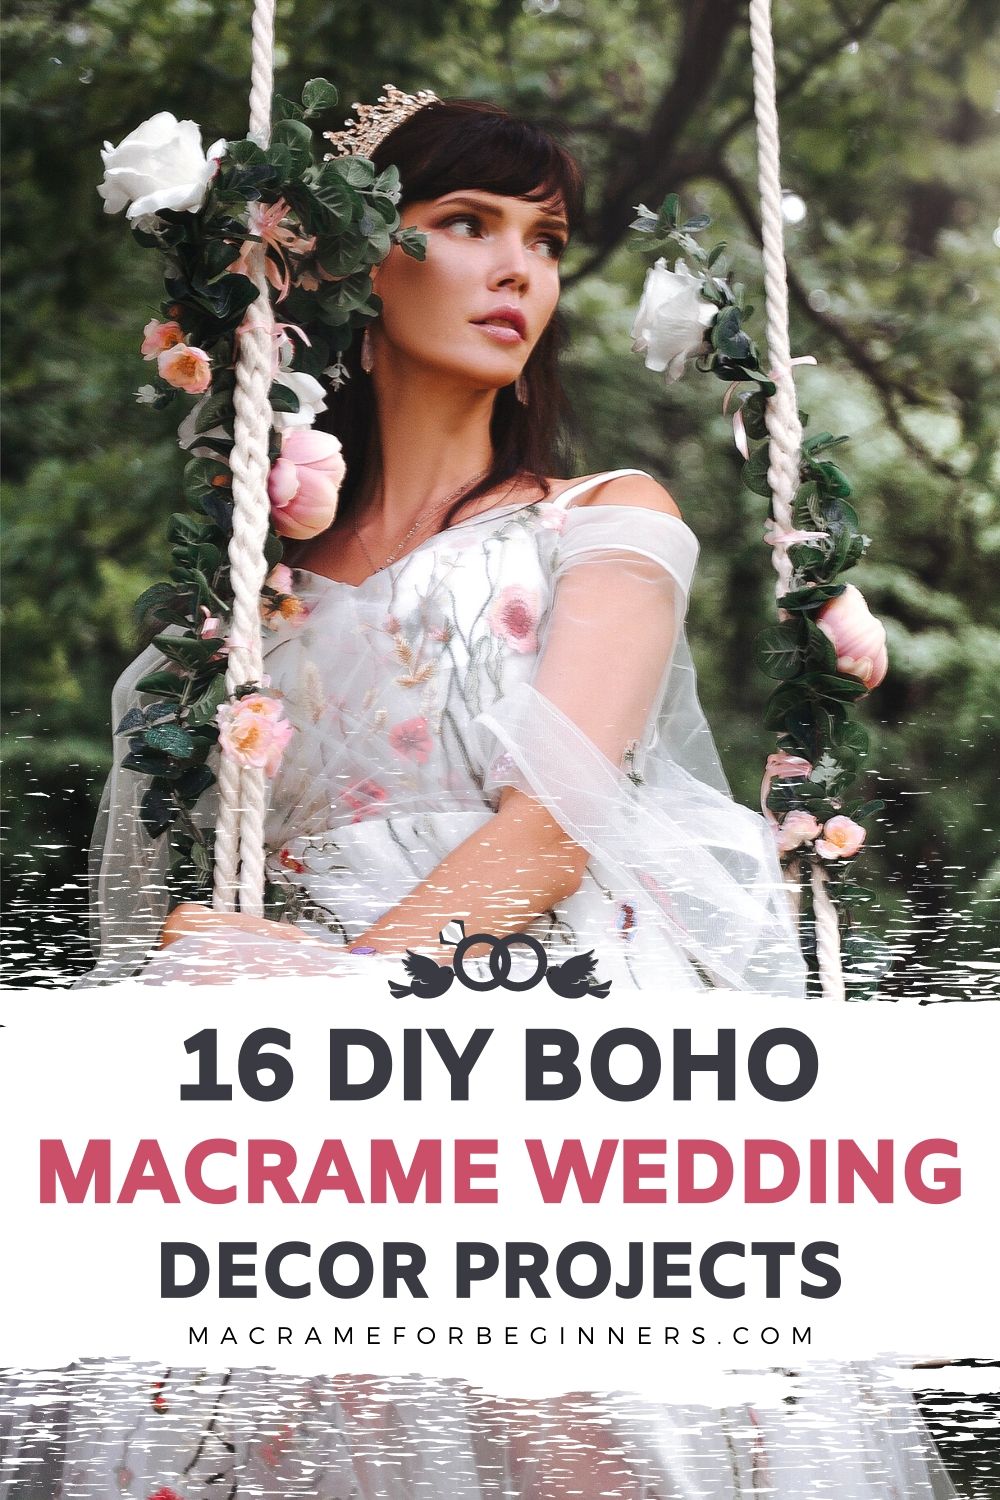 16 DIY Boho Macrame Wedding Decor Ideas - Macrame Projects for Beginners